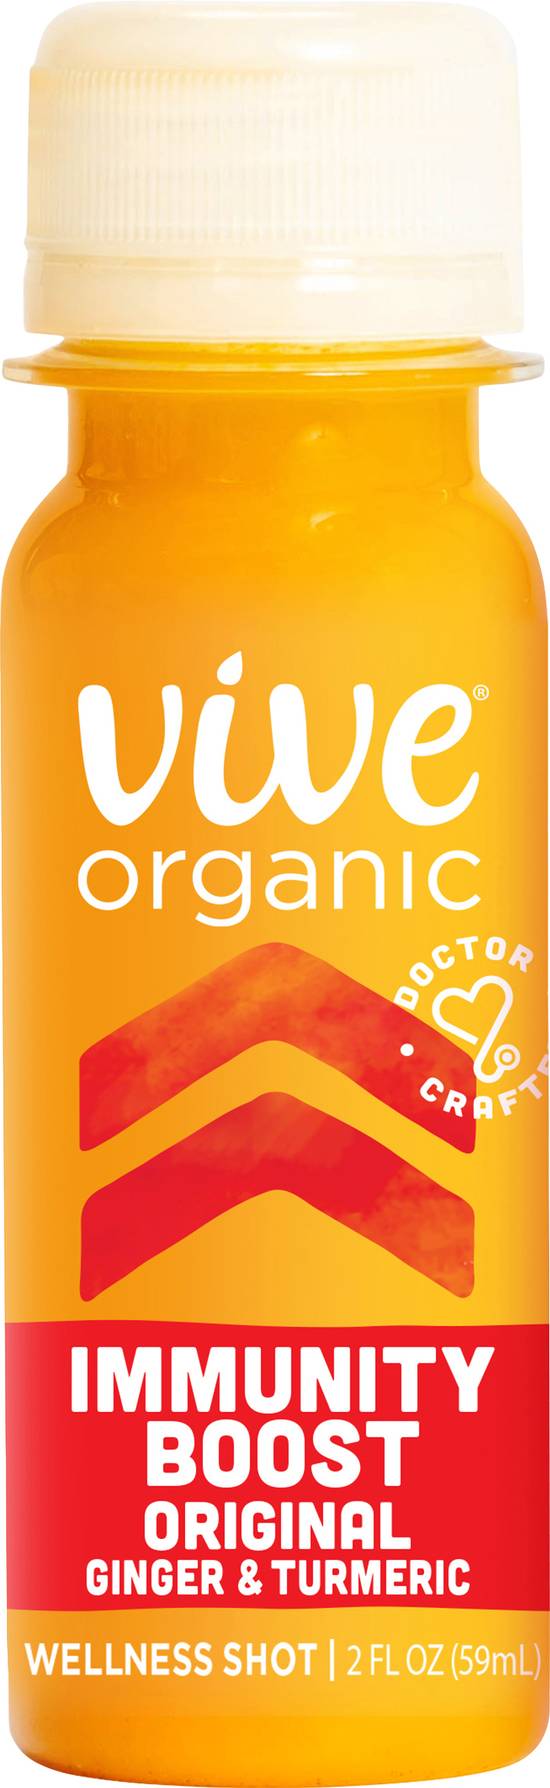 Vive Organic Immunity Boost Original Ginger & Turmeric Shot (2 fl oz)